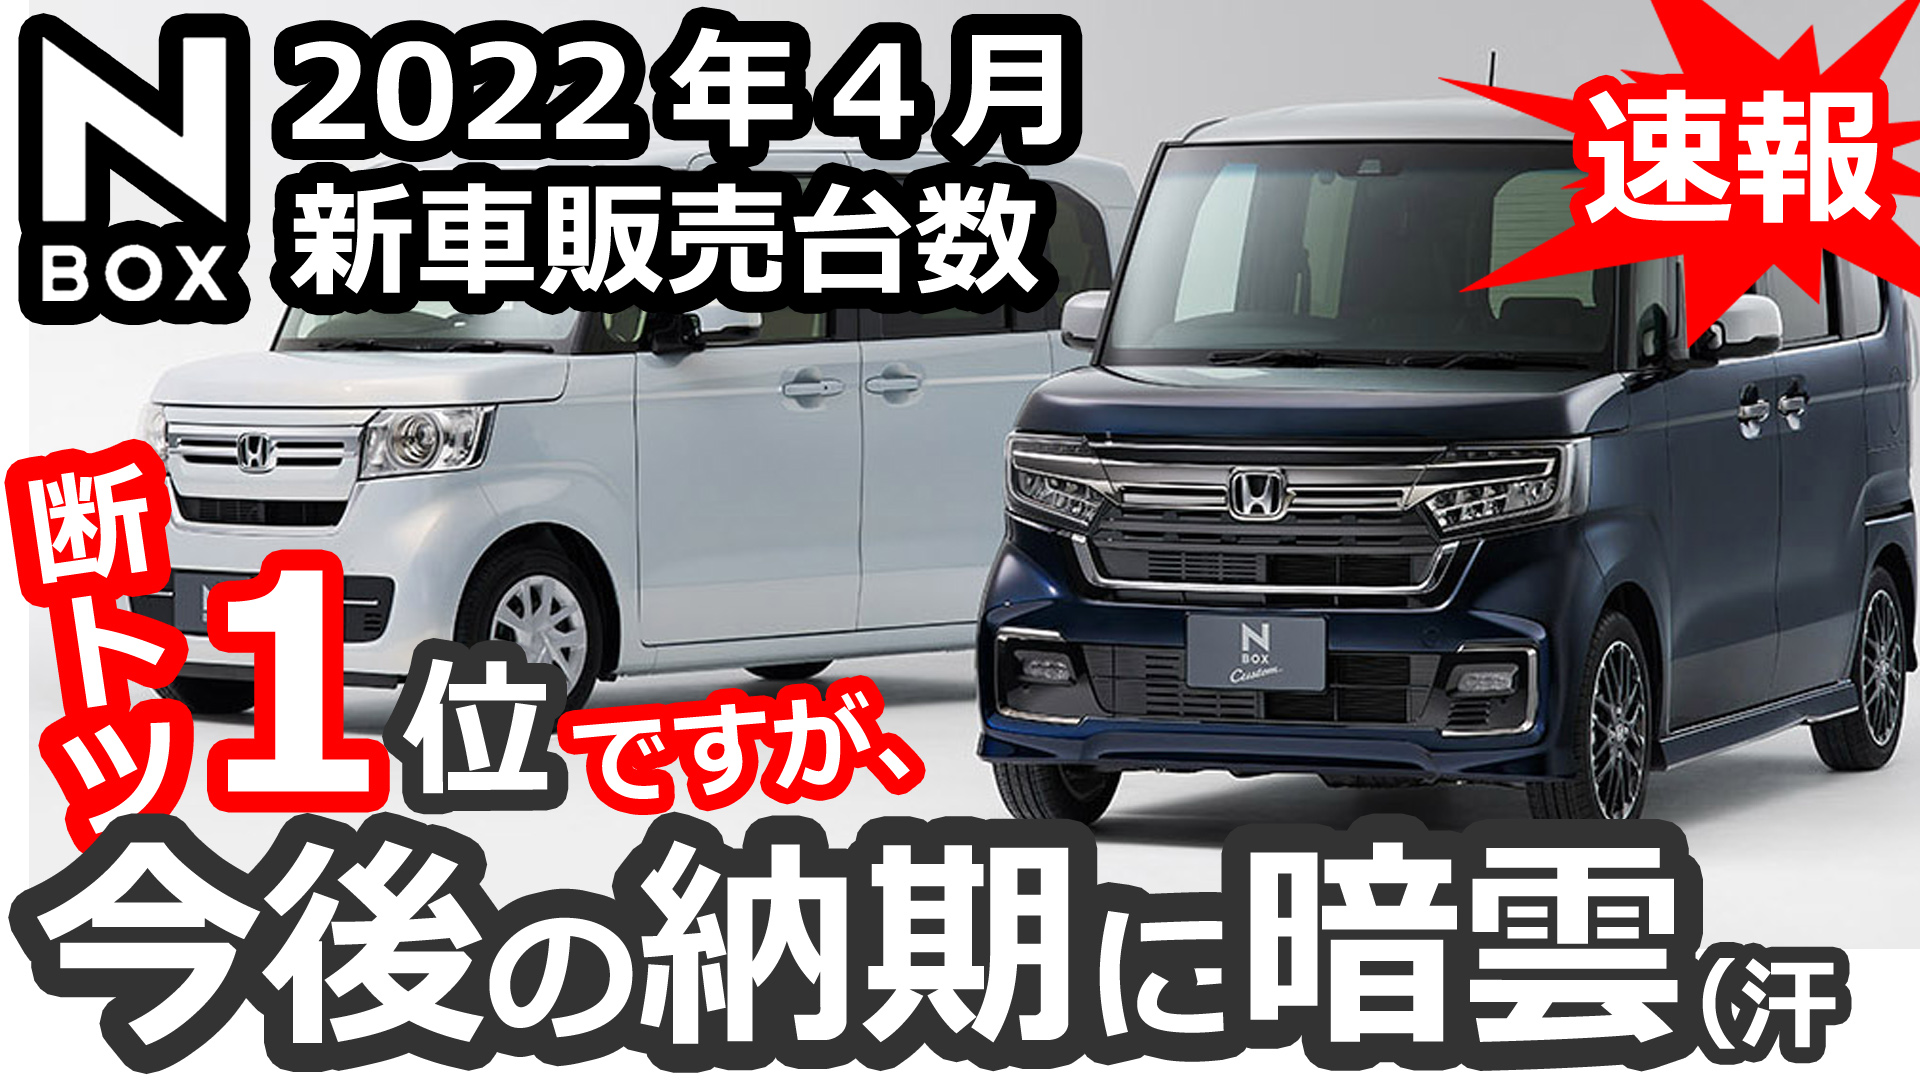 Honda N Box 22年４月 新車販売台数 揺るぎなき１位だが 今後の納期に暗雲立ちこめる Momotaro Blog